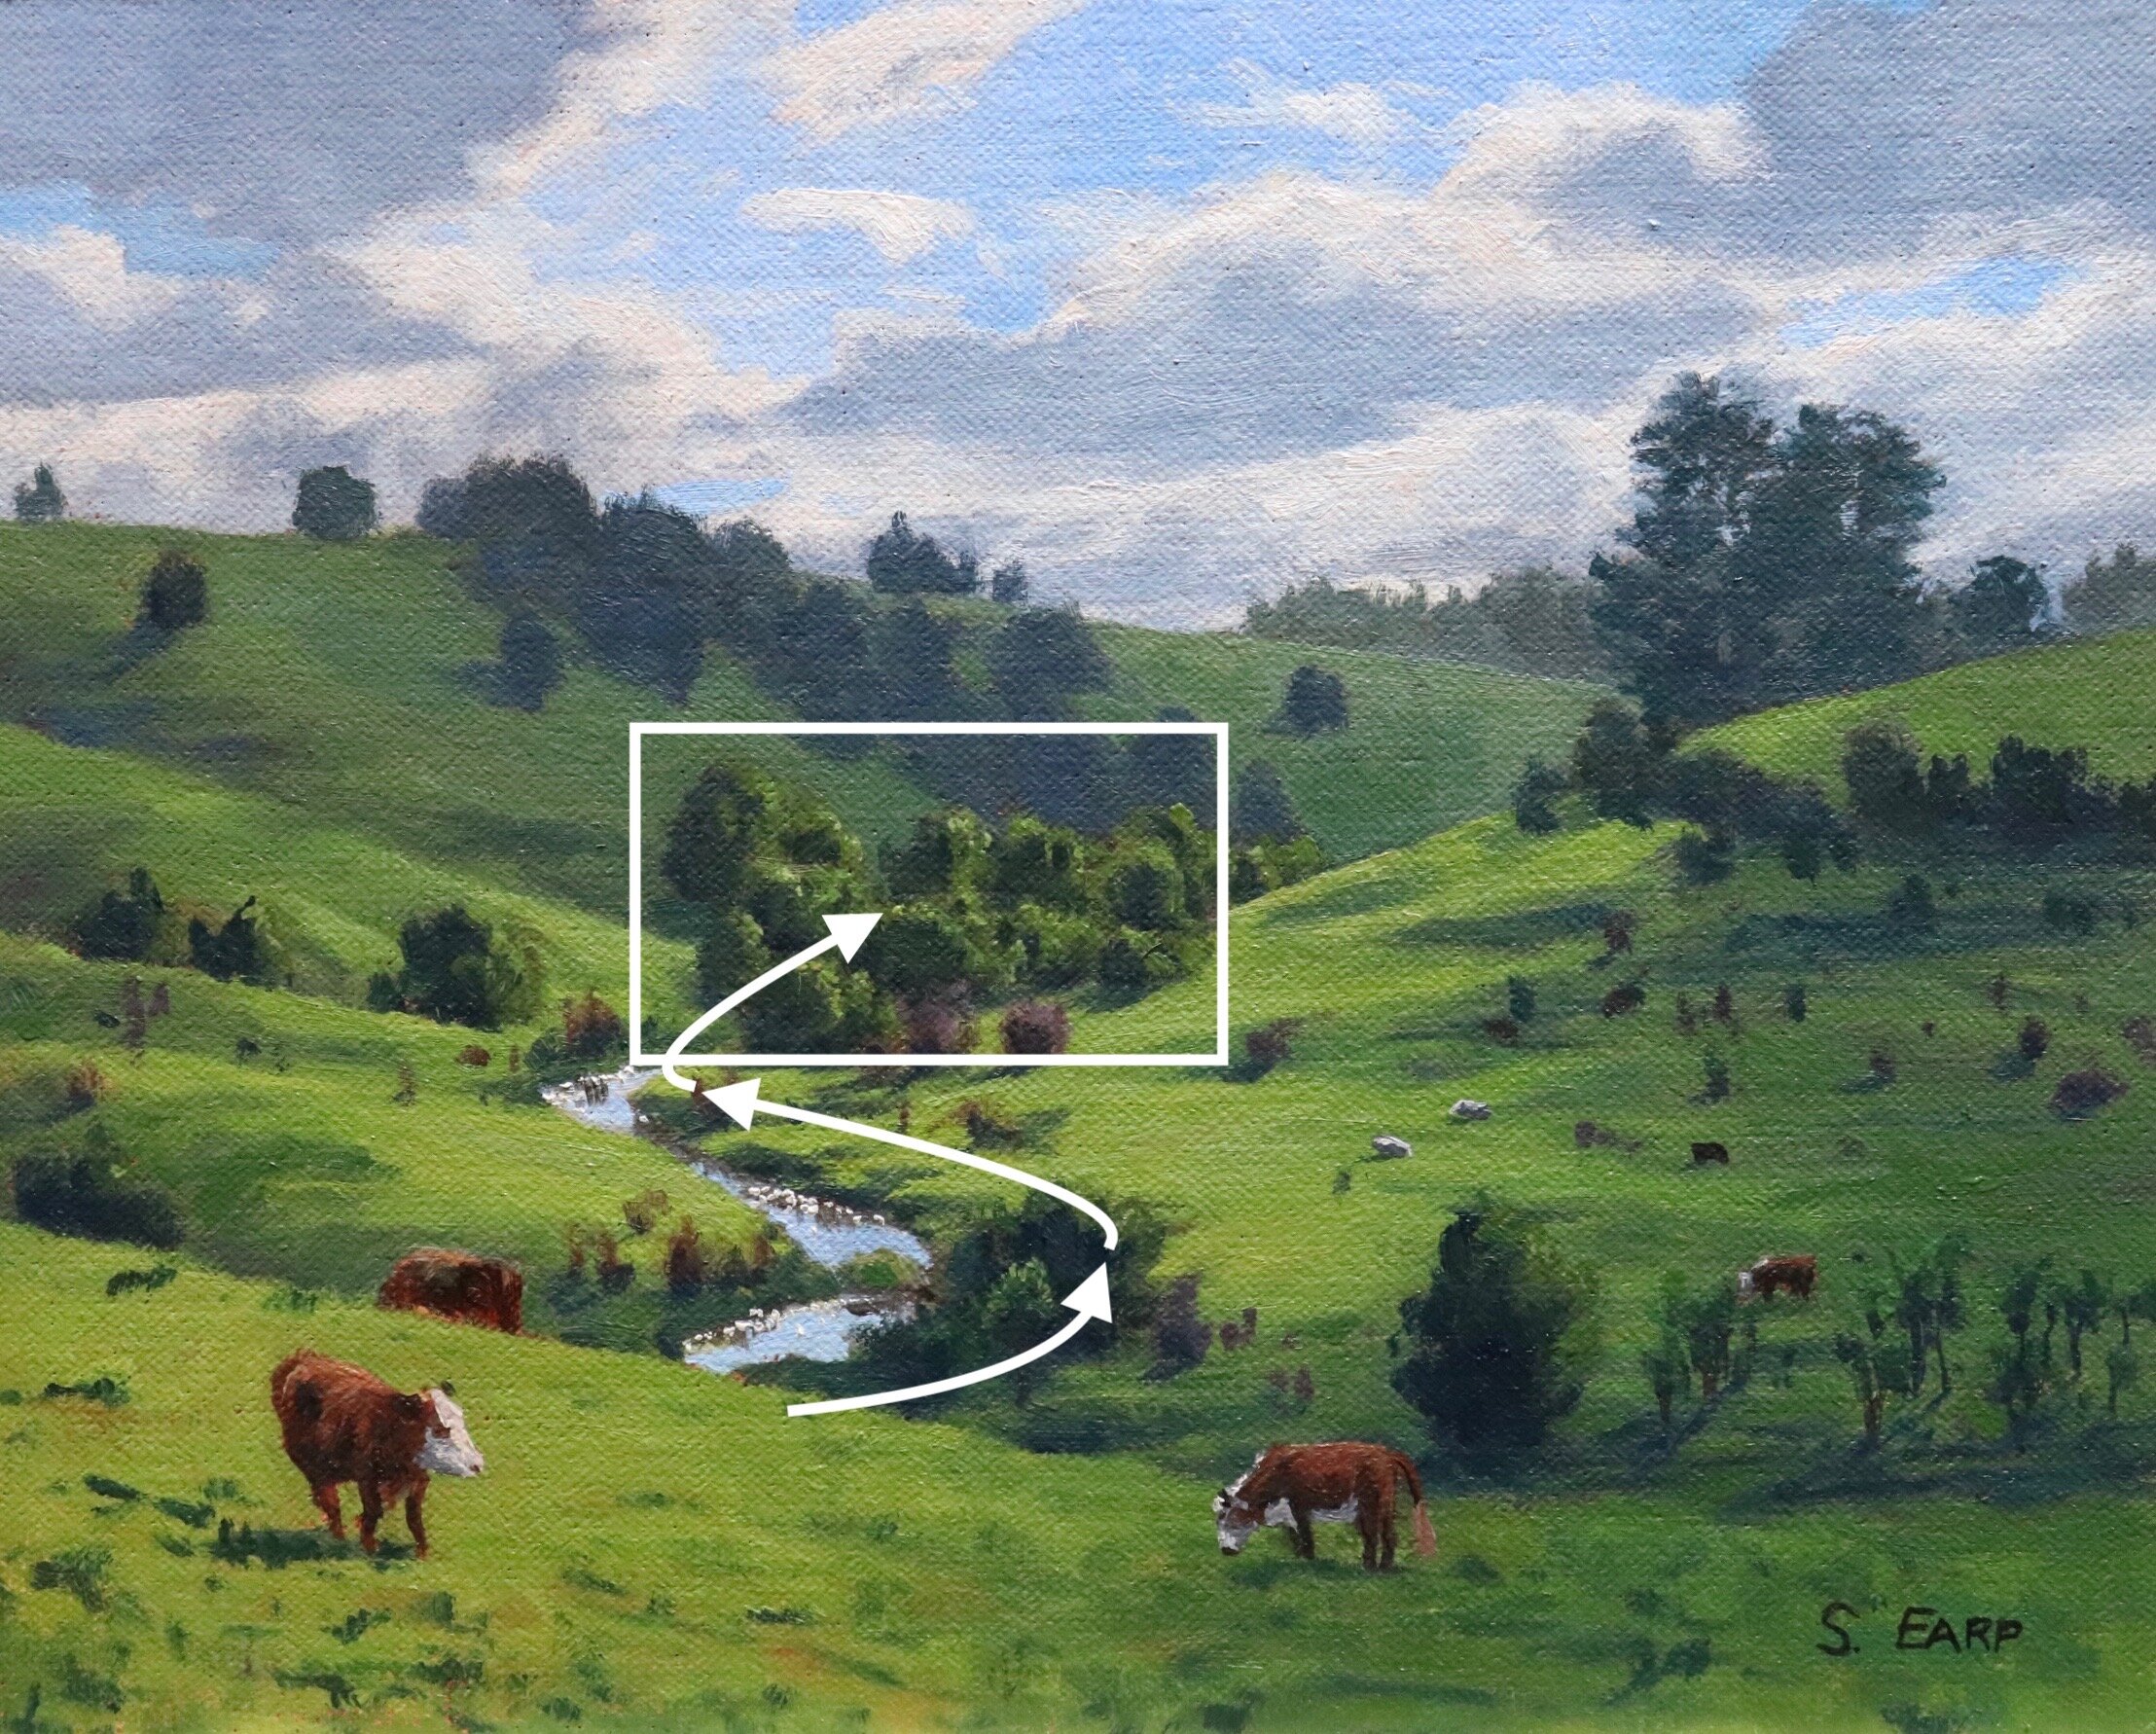 Hidden Valley - Samuel Earp - oil painting copy 2.jpeg